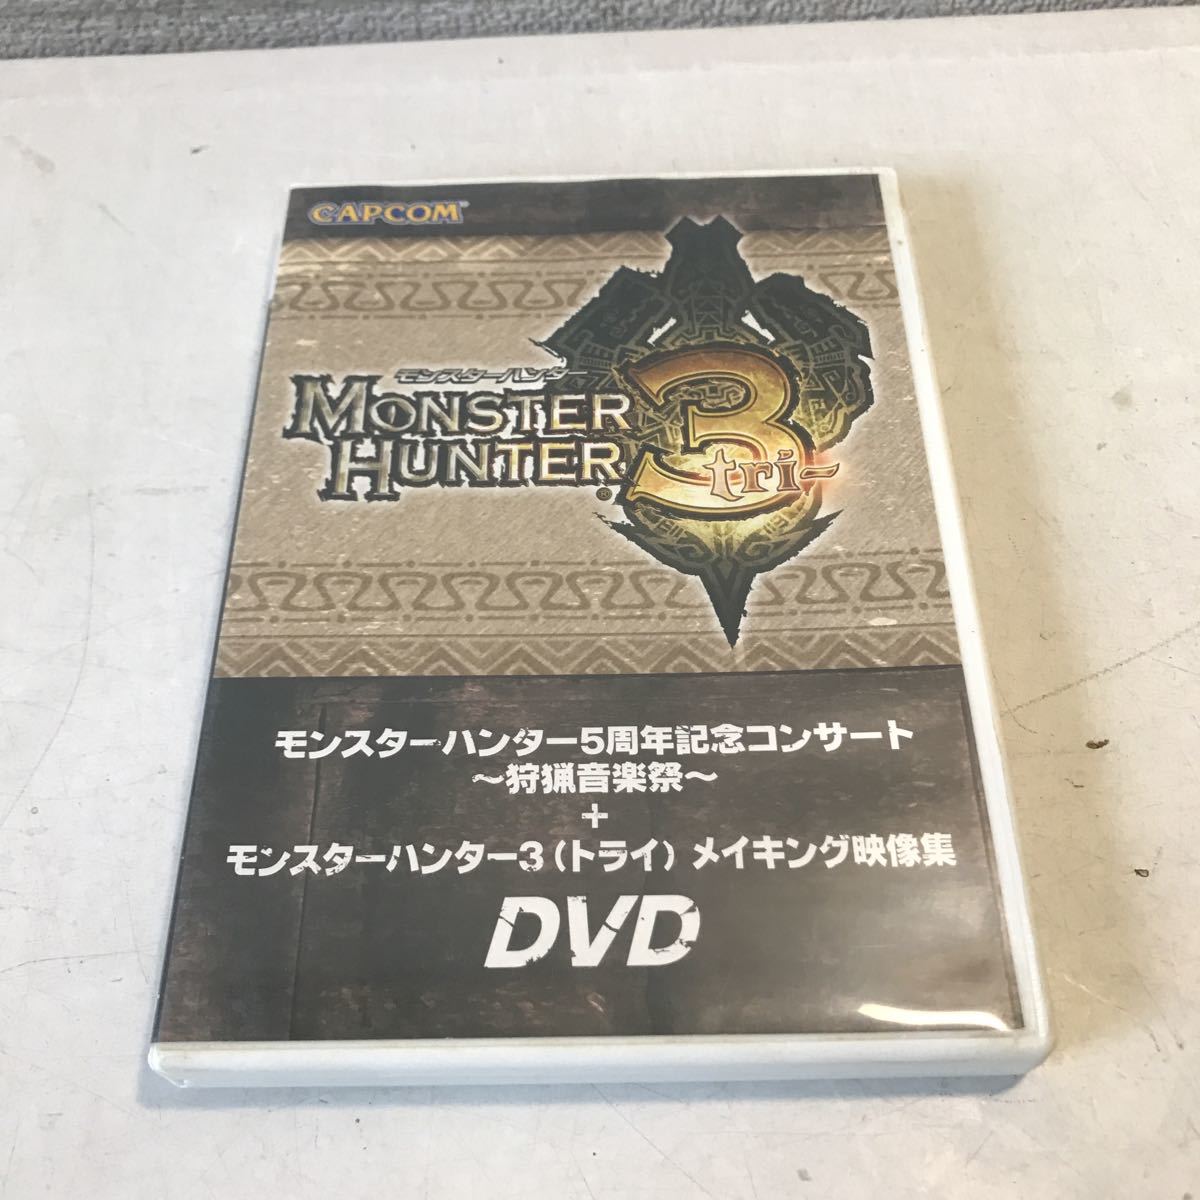 M23* DVD Monstar Hunter 3( Try ) making image compilation 5 anniversary concert hunting music festival Capcom not for sale *230525